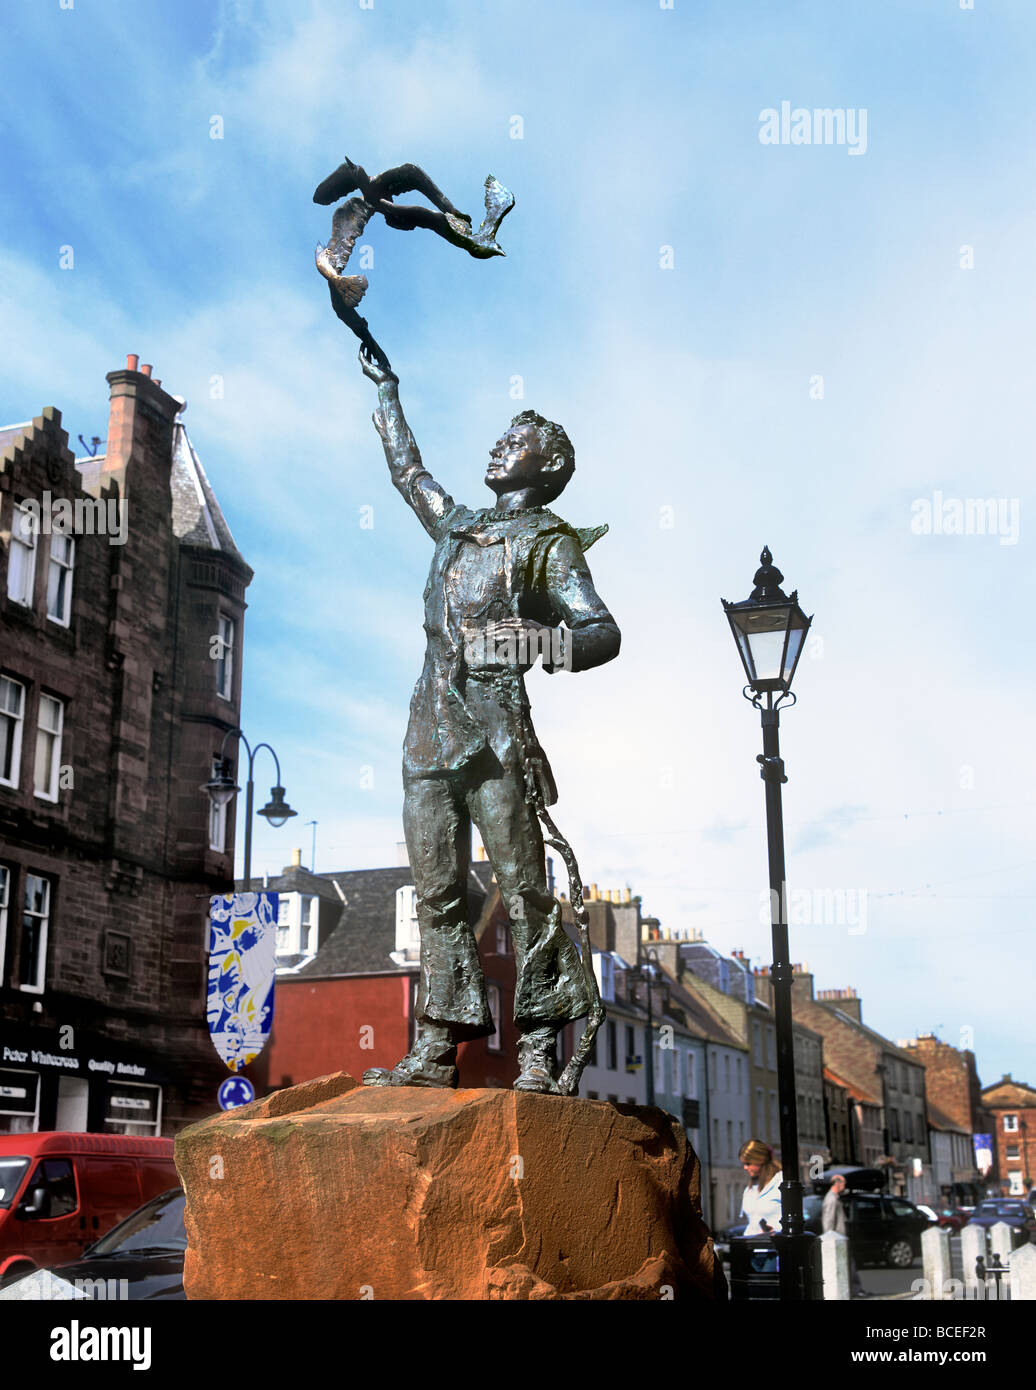 Statua di John Muir, pionieristico conservazionista e fondatore della US Sierra Club. Statua si trova in High St, Dunbar, Scozia Foto Stock